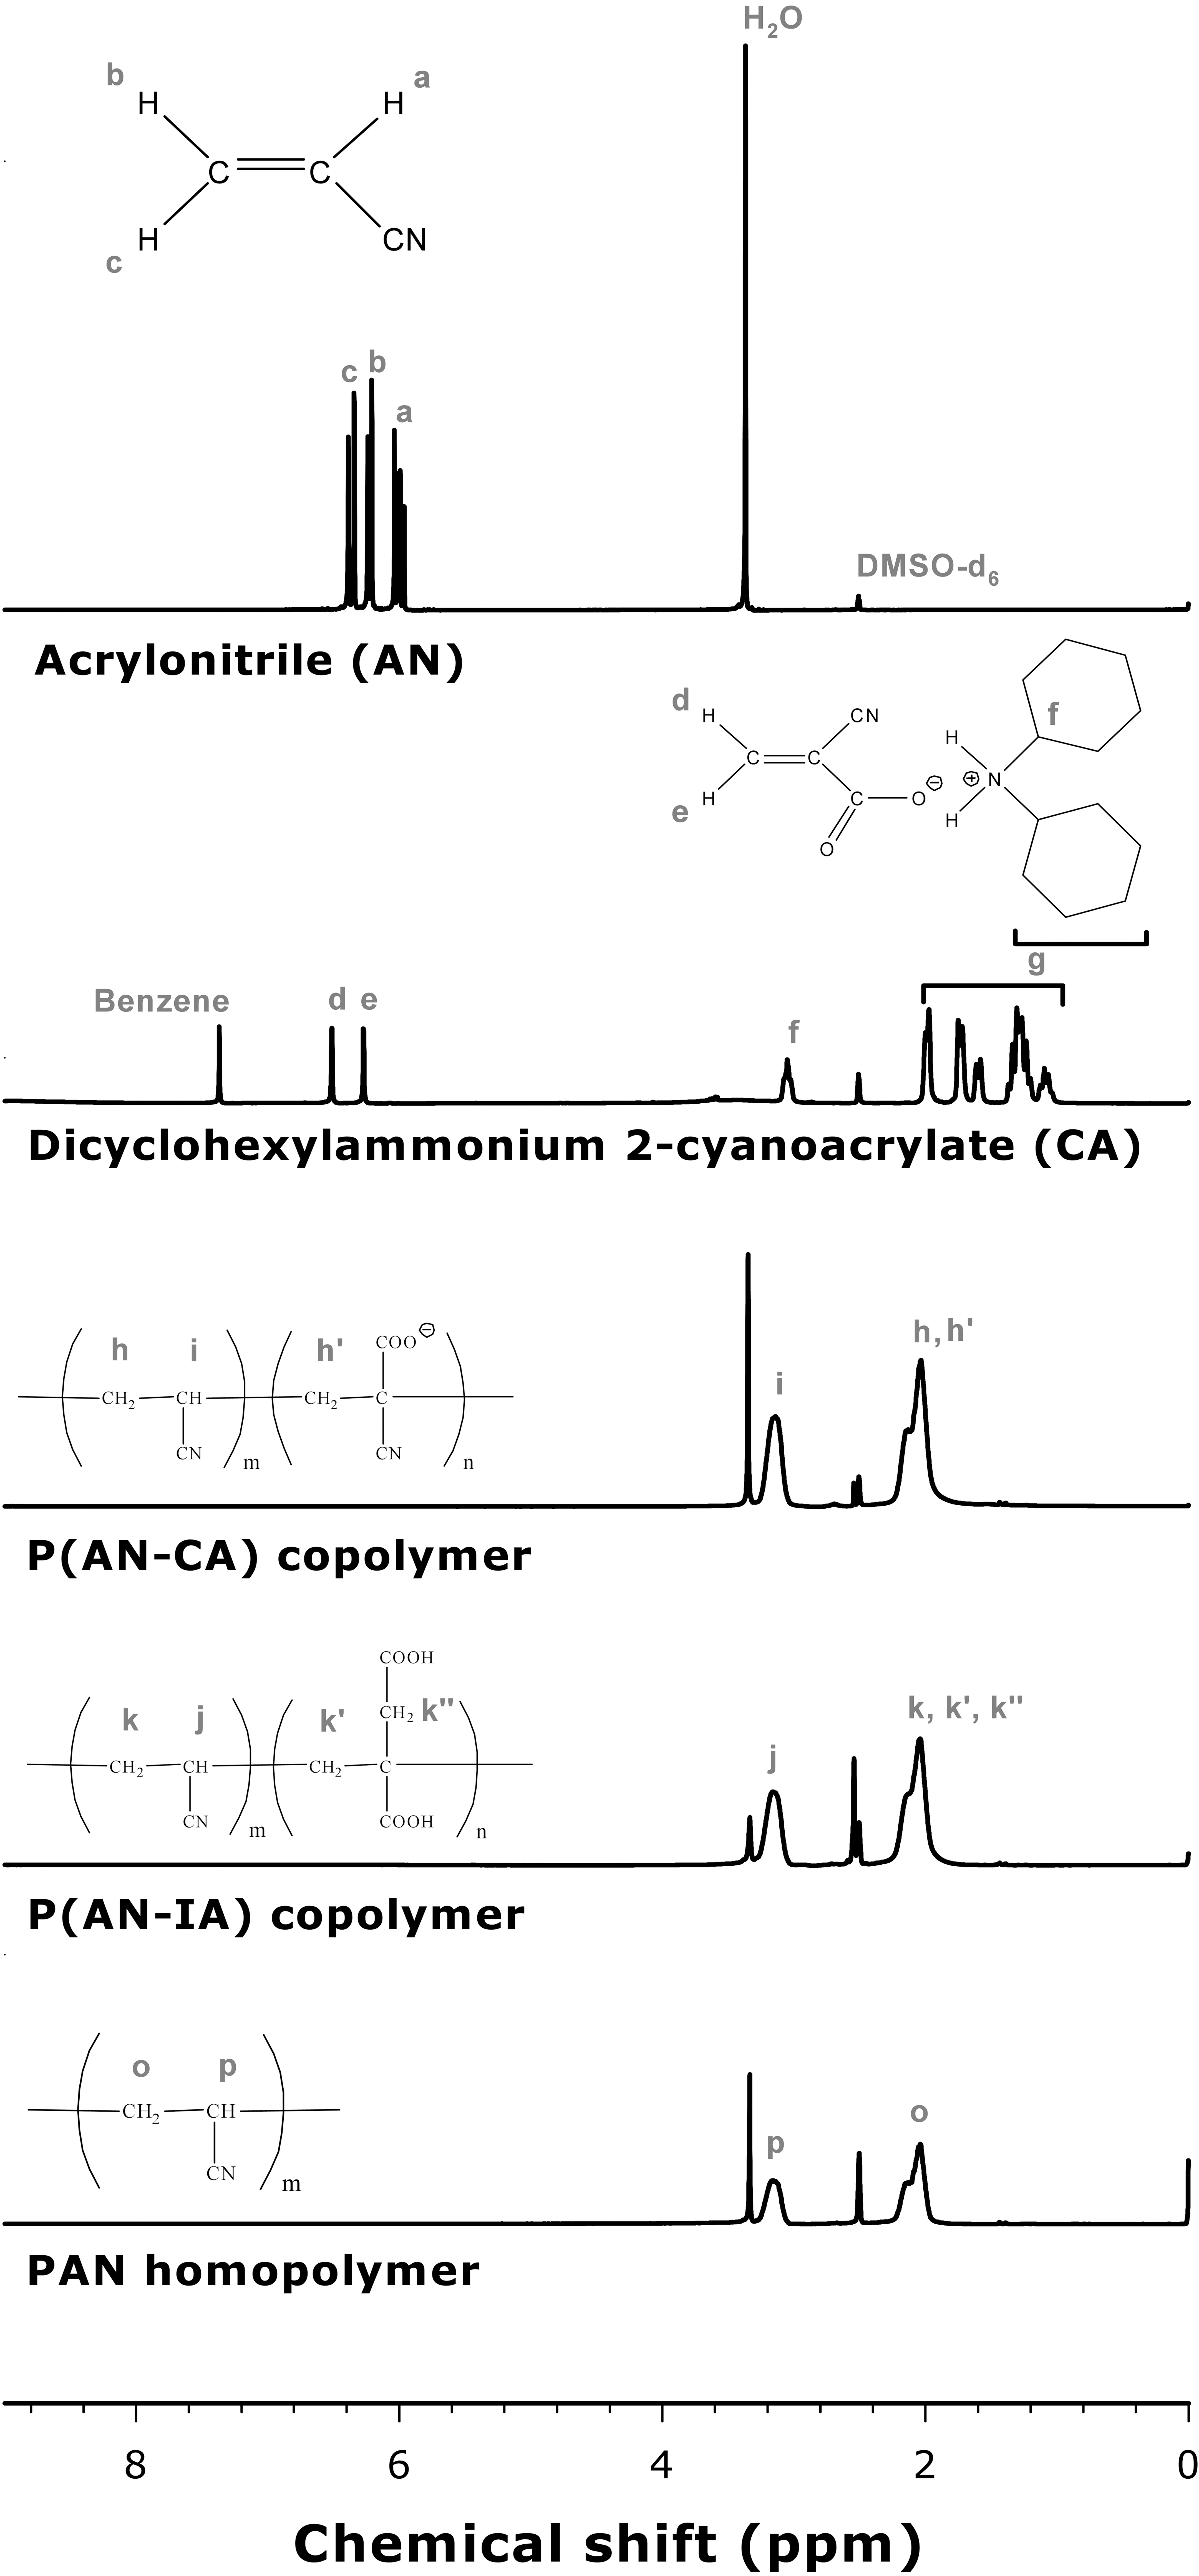 Proton nuclear magnetic resonance spectra of monomersand polyacrylonitrile (PAN) precursors.